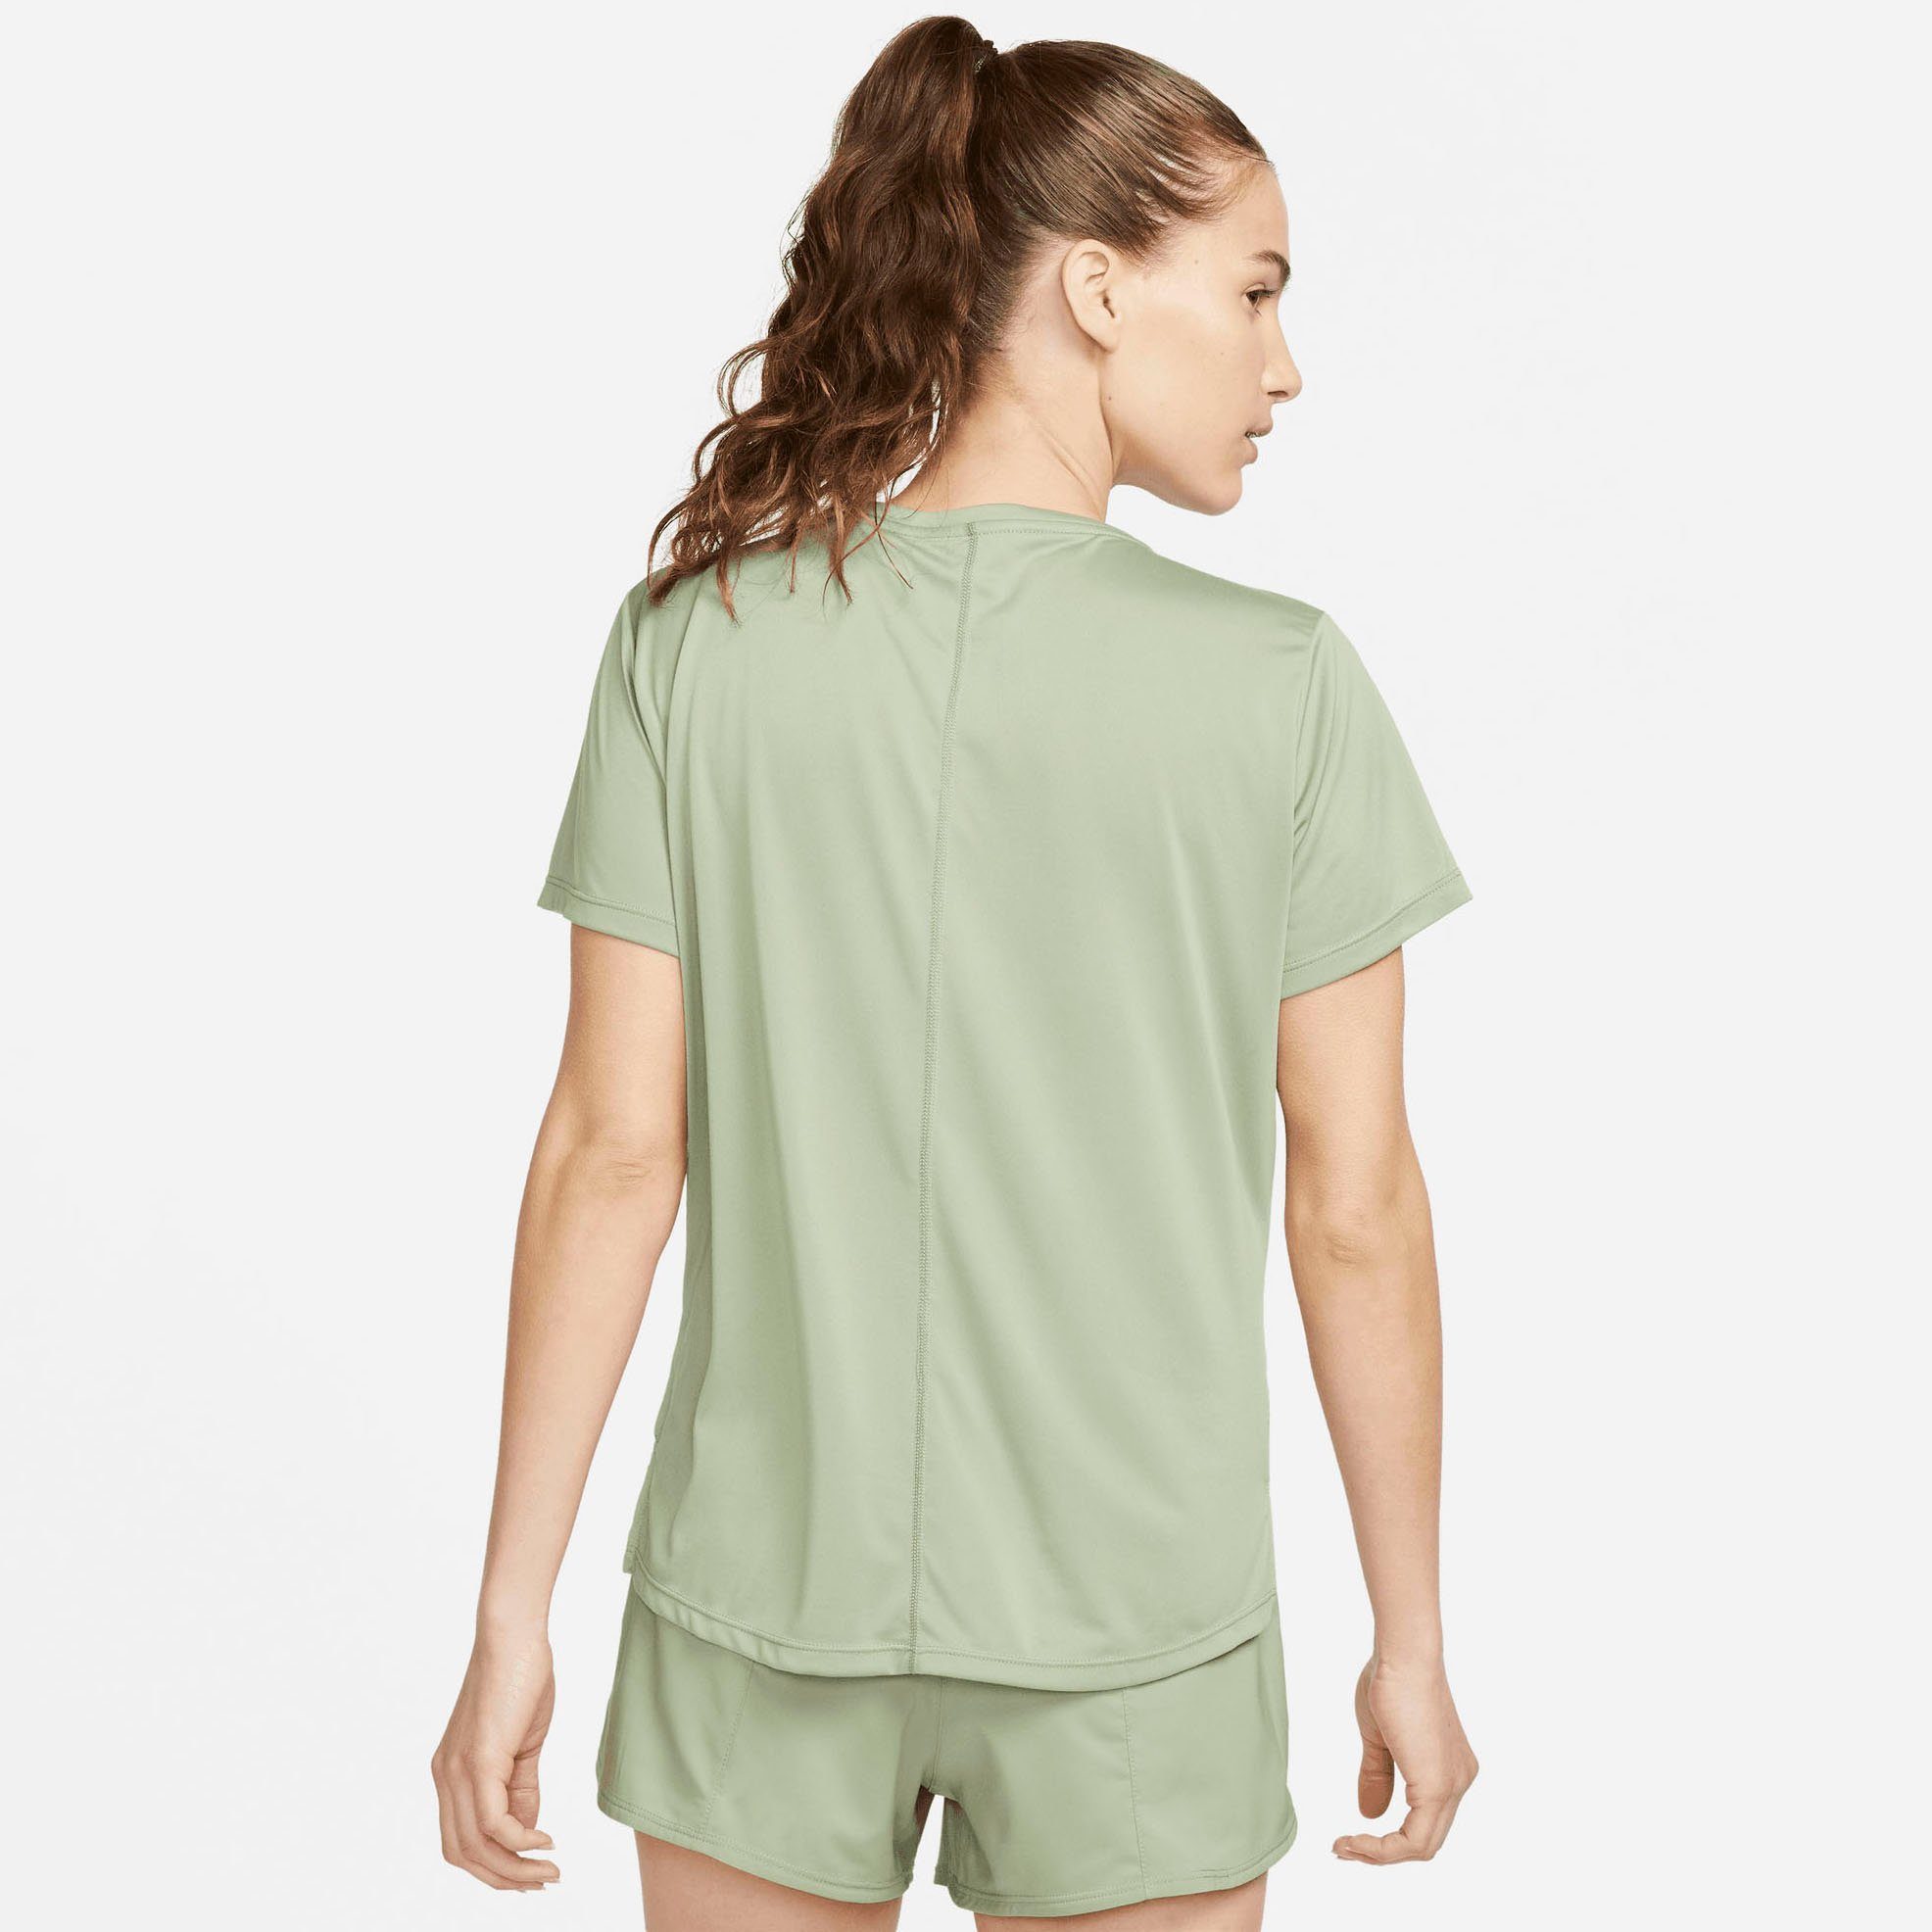 Nike Laufshirt One Dri-FIT Swoosh Top grün Women's Short-Sleeved